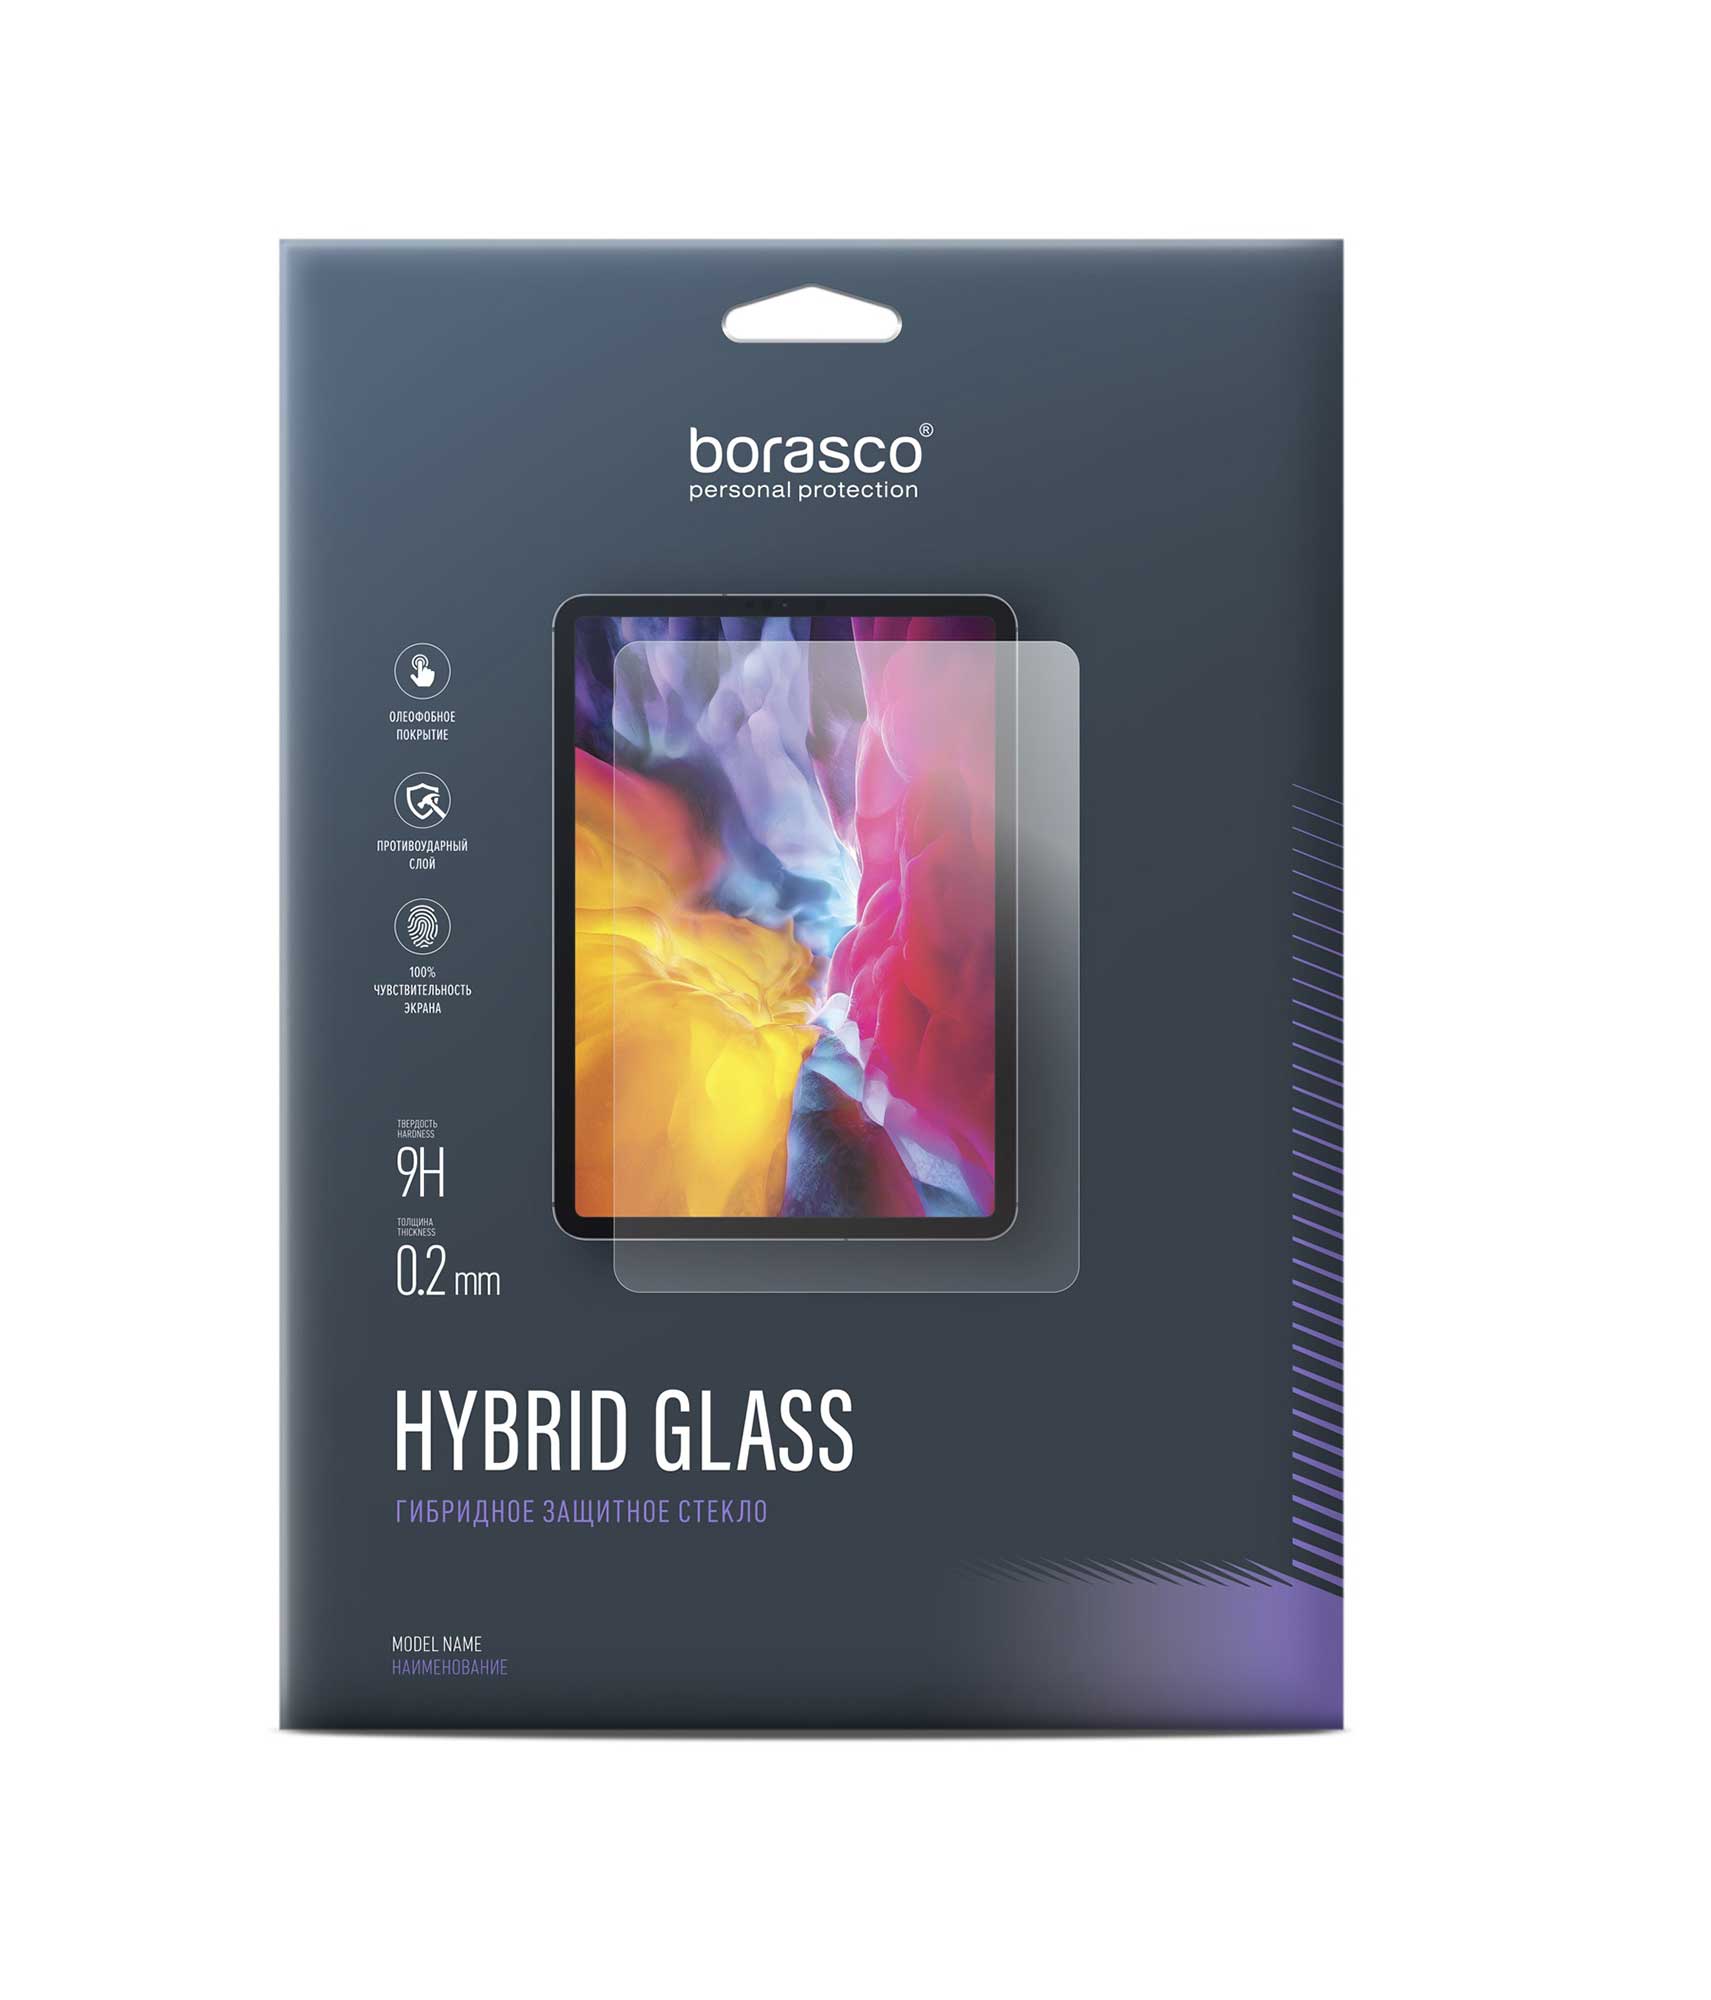 Защитное стекло BoraSCO Hybrid Glass для Samsung Galaxy Tab Active SM-T365 (2014) защитное стекло hybrid glass для samsung galaxy tab s7 sm t970 sm t975